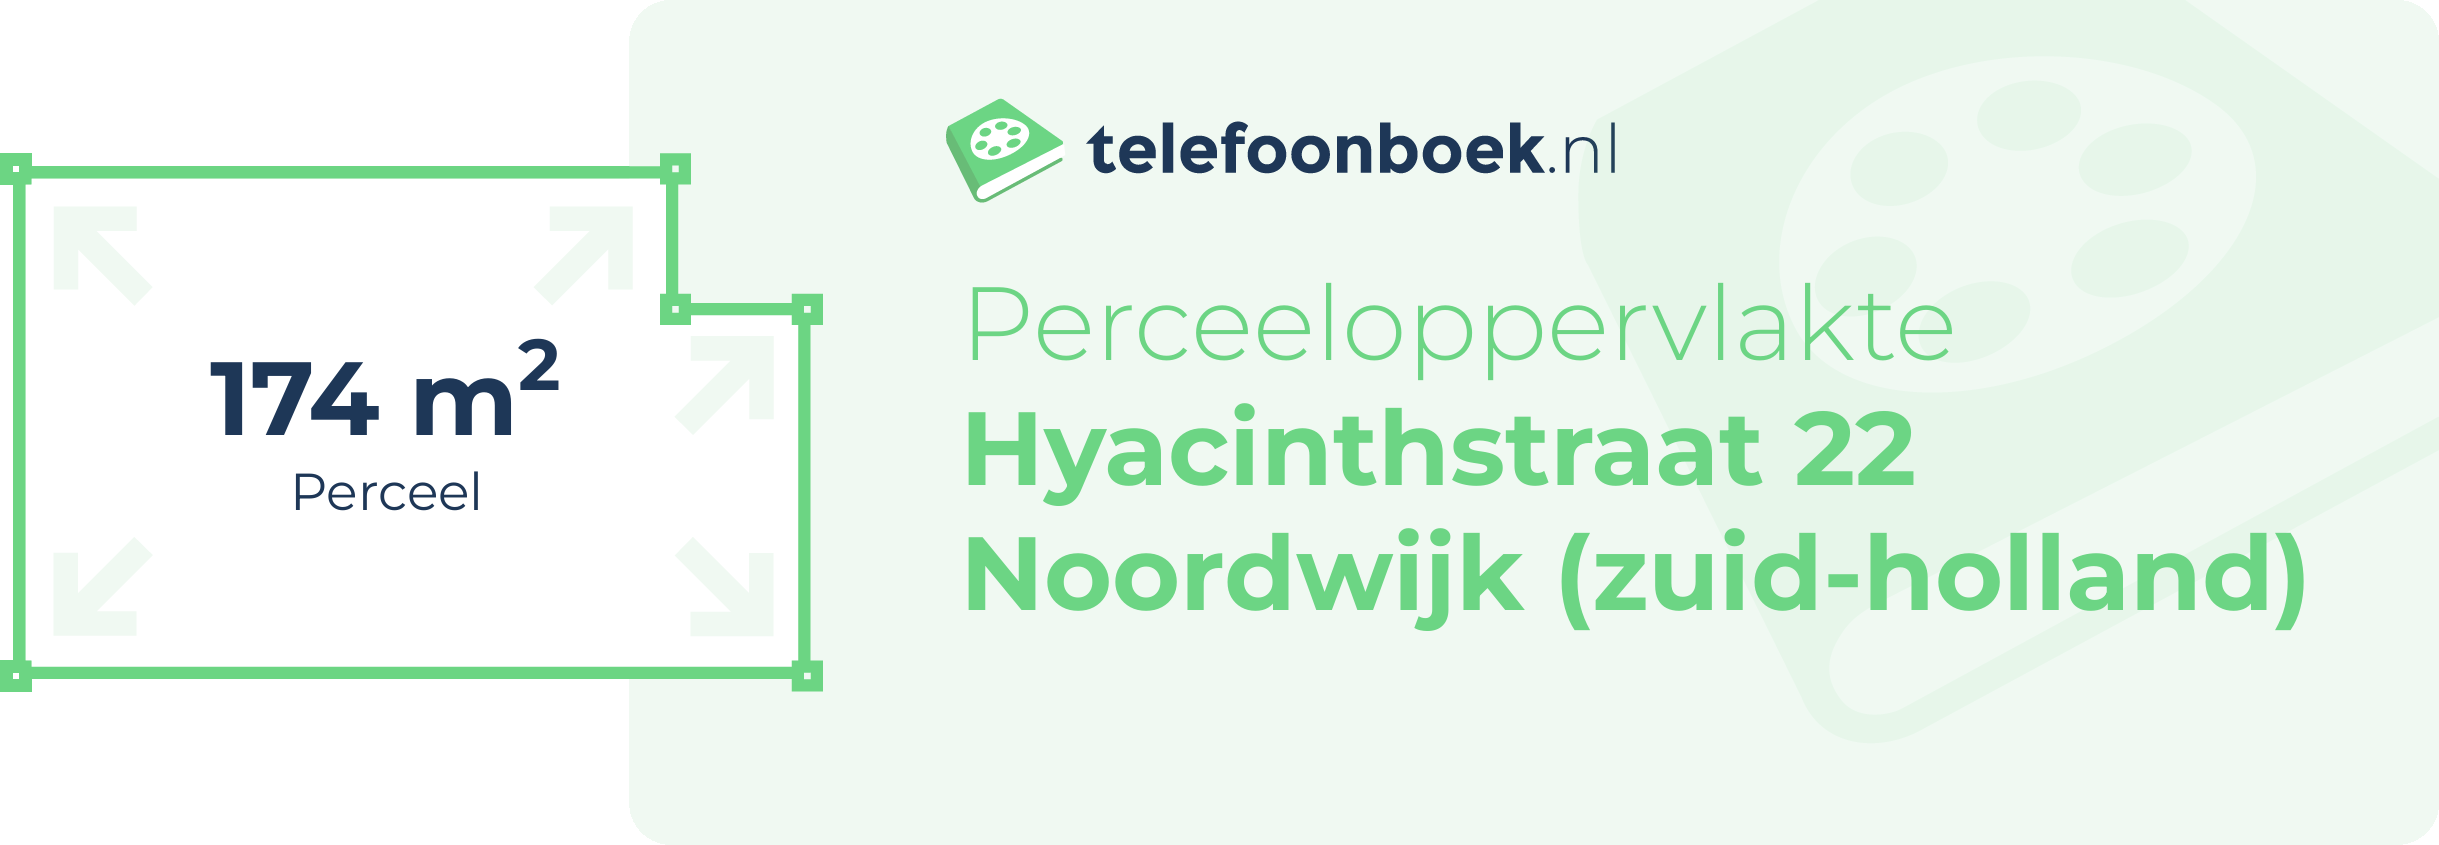 Perceeloppervlakte Hyacinthstraat 22 Noordwijk (Zuid-Holland)